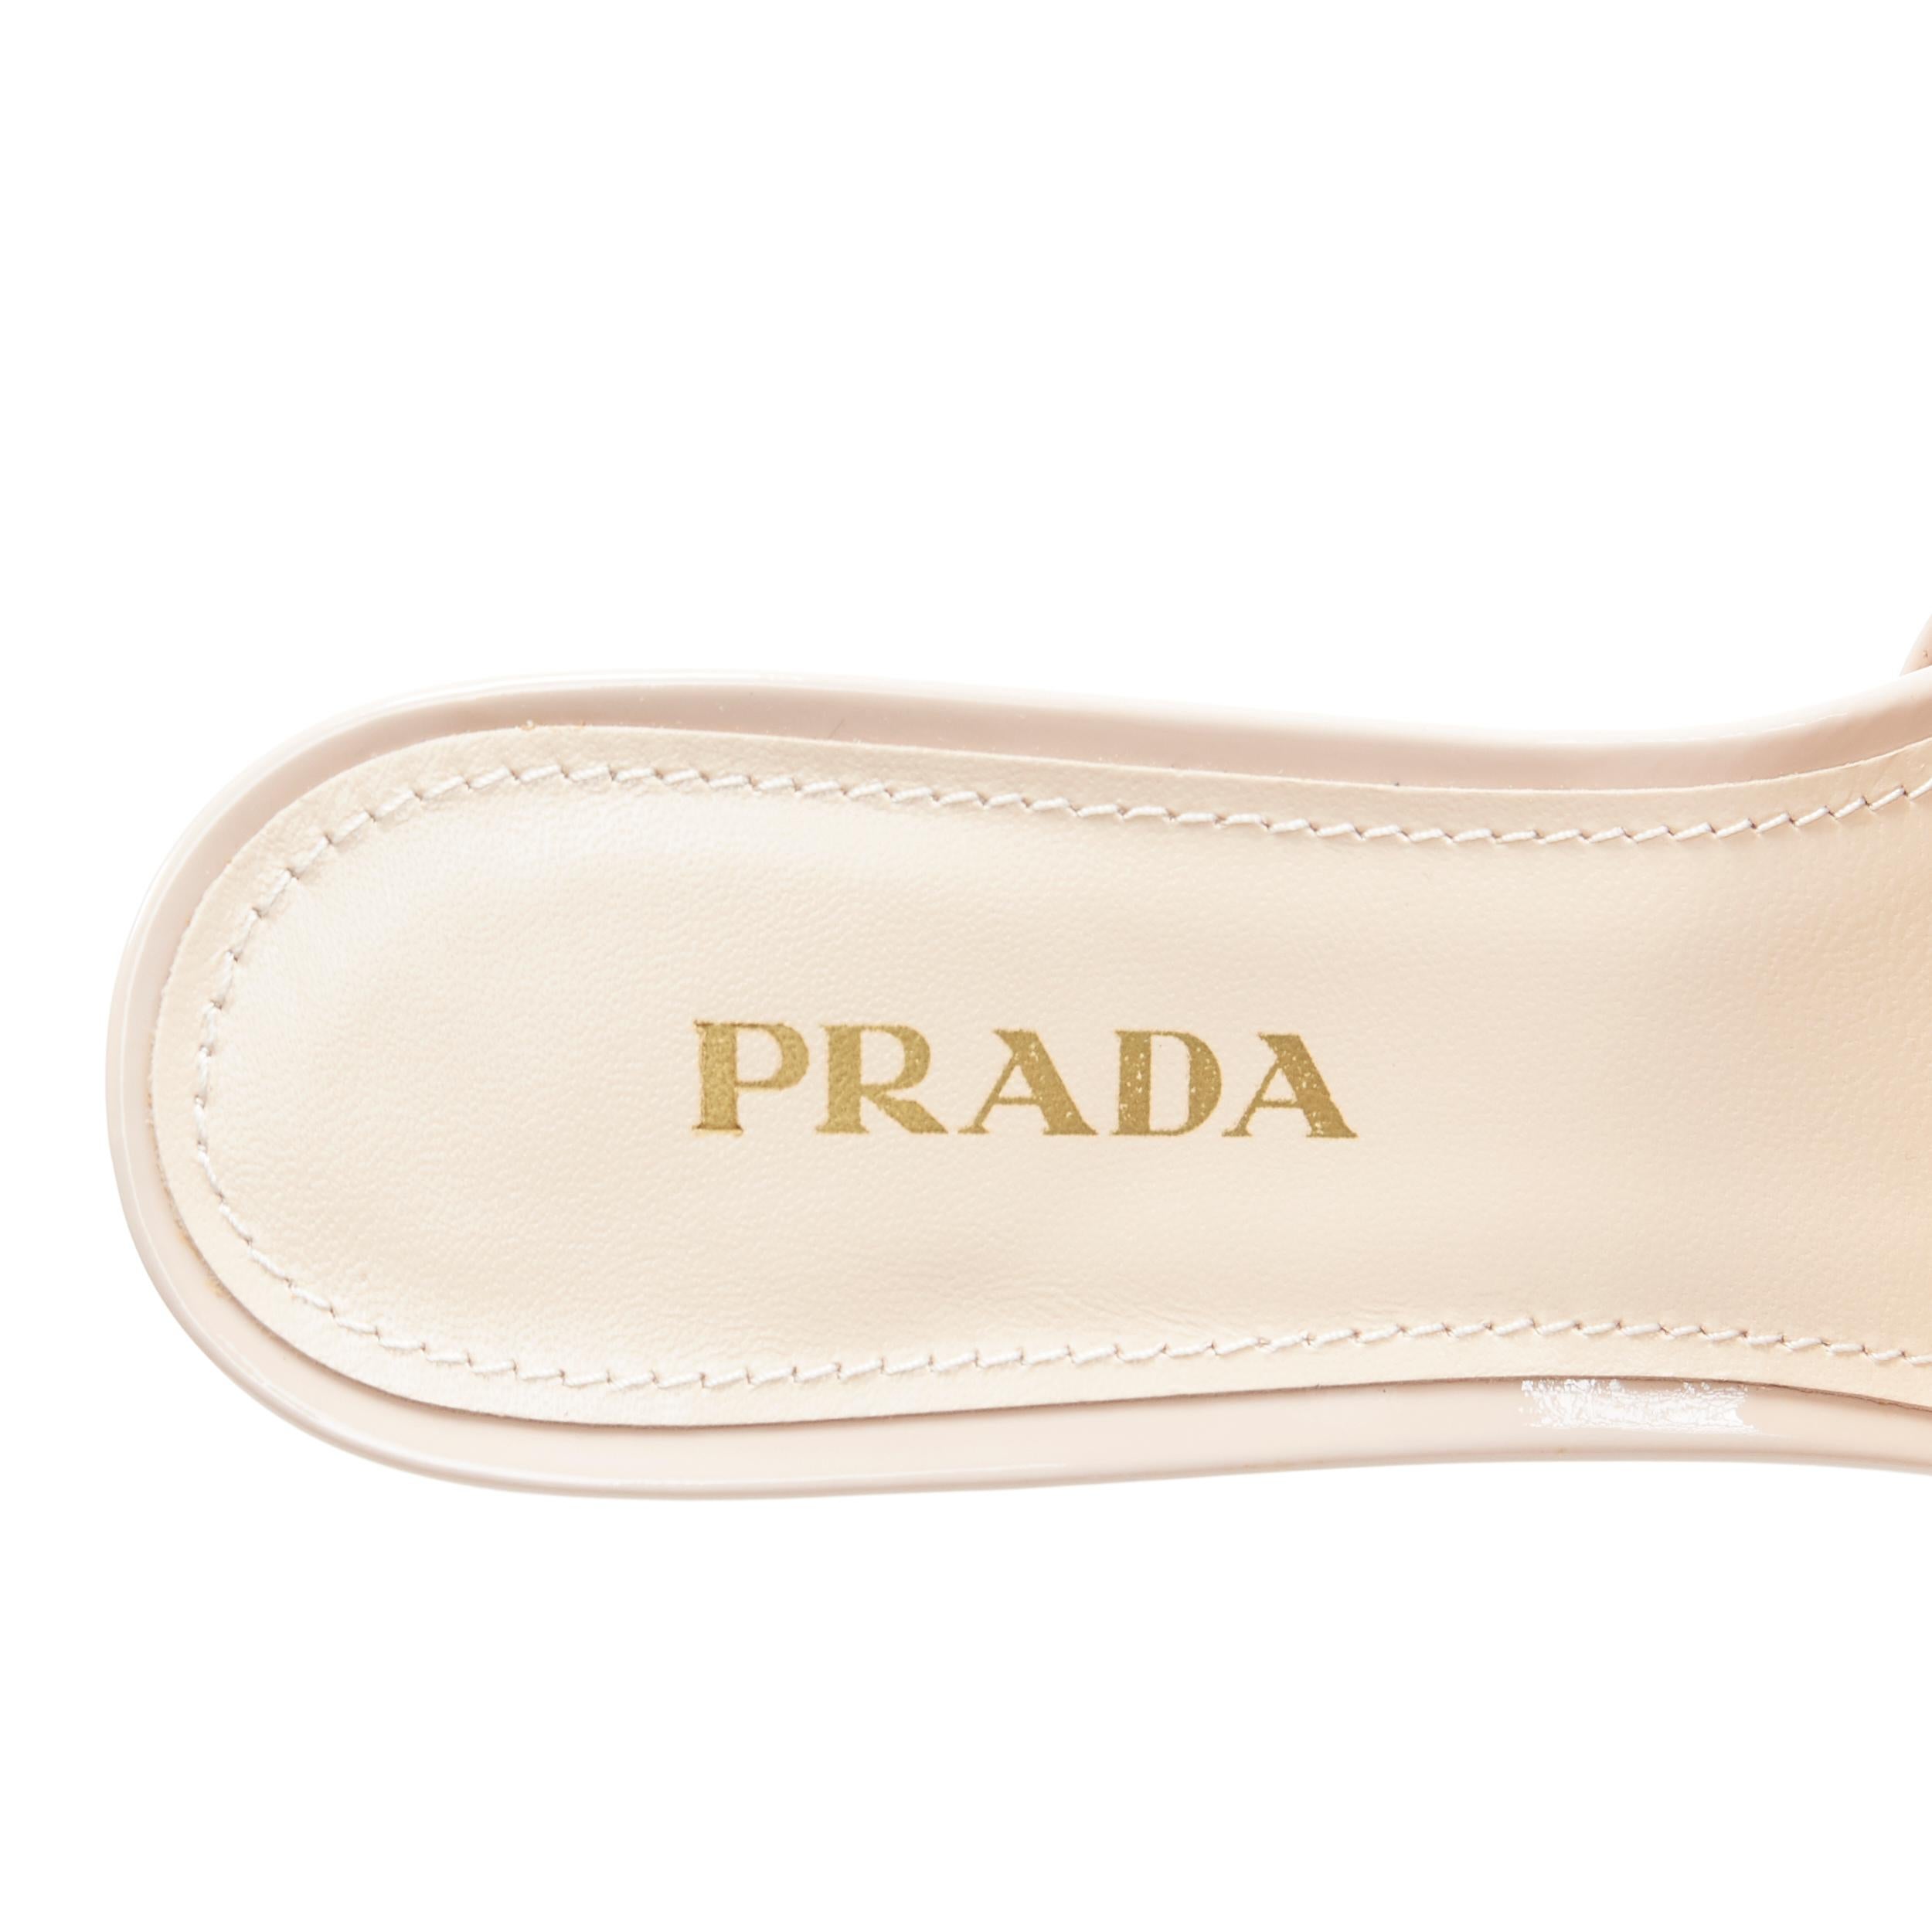 new PRADA blush nude patent silver logo platform block heel mule clog shoes EU39 2